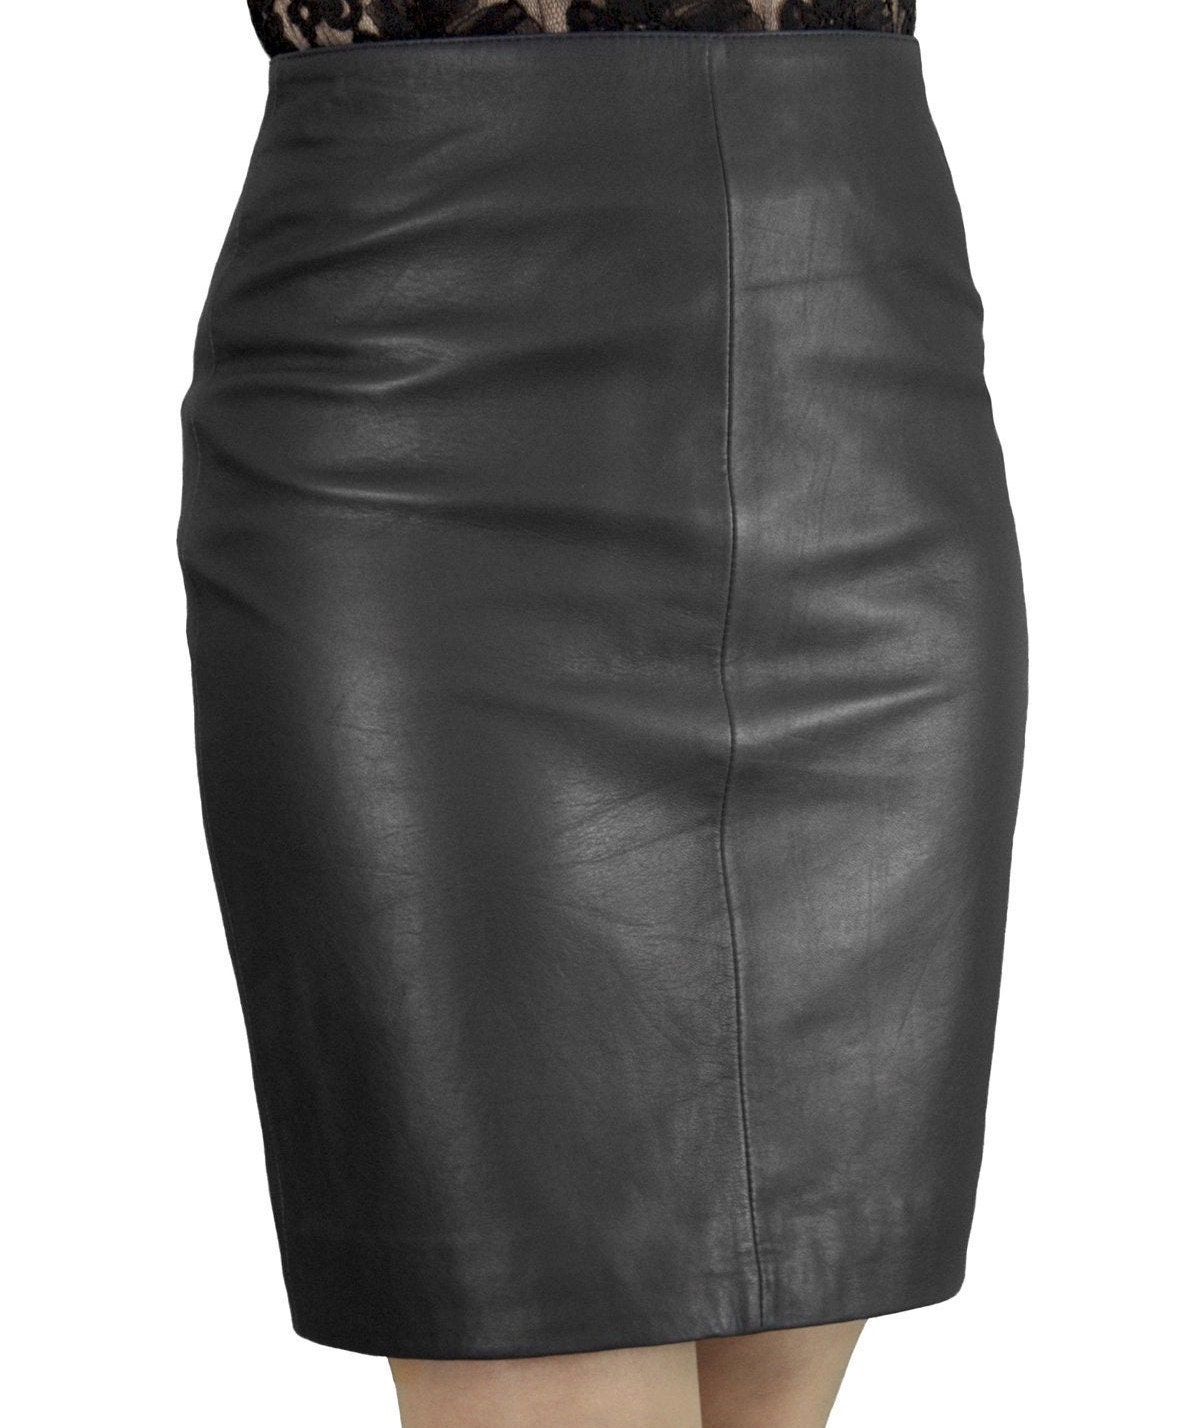 Handmade Women's Genuine Lambskin Leather Skirt Outfit | Etsy